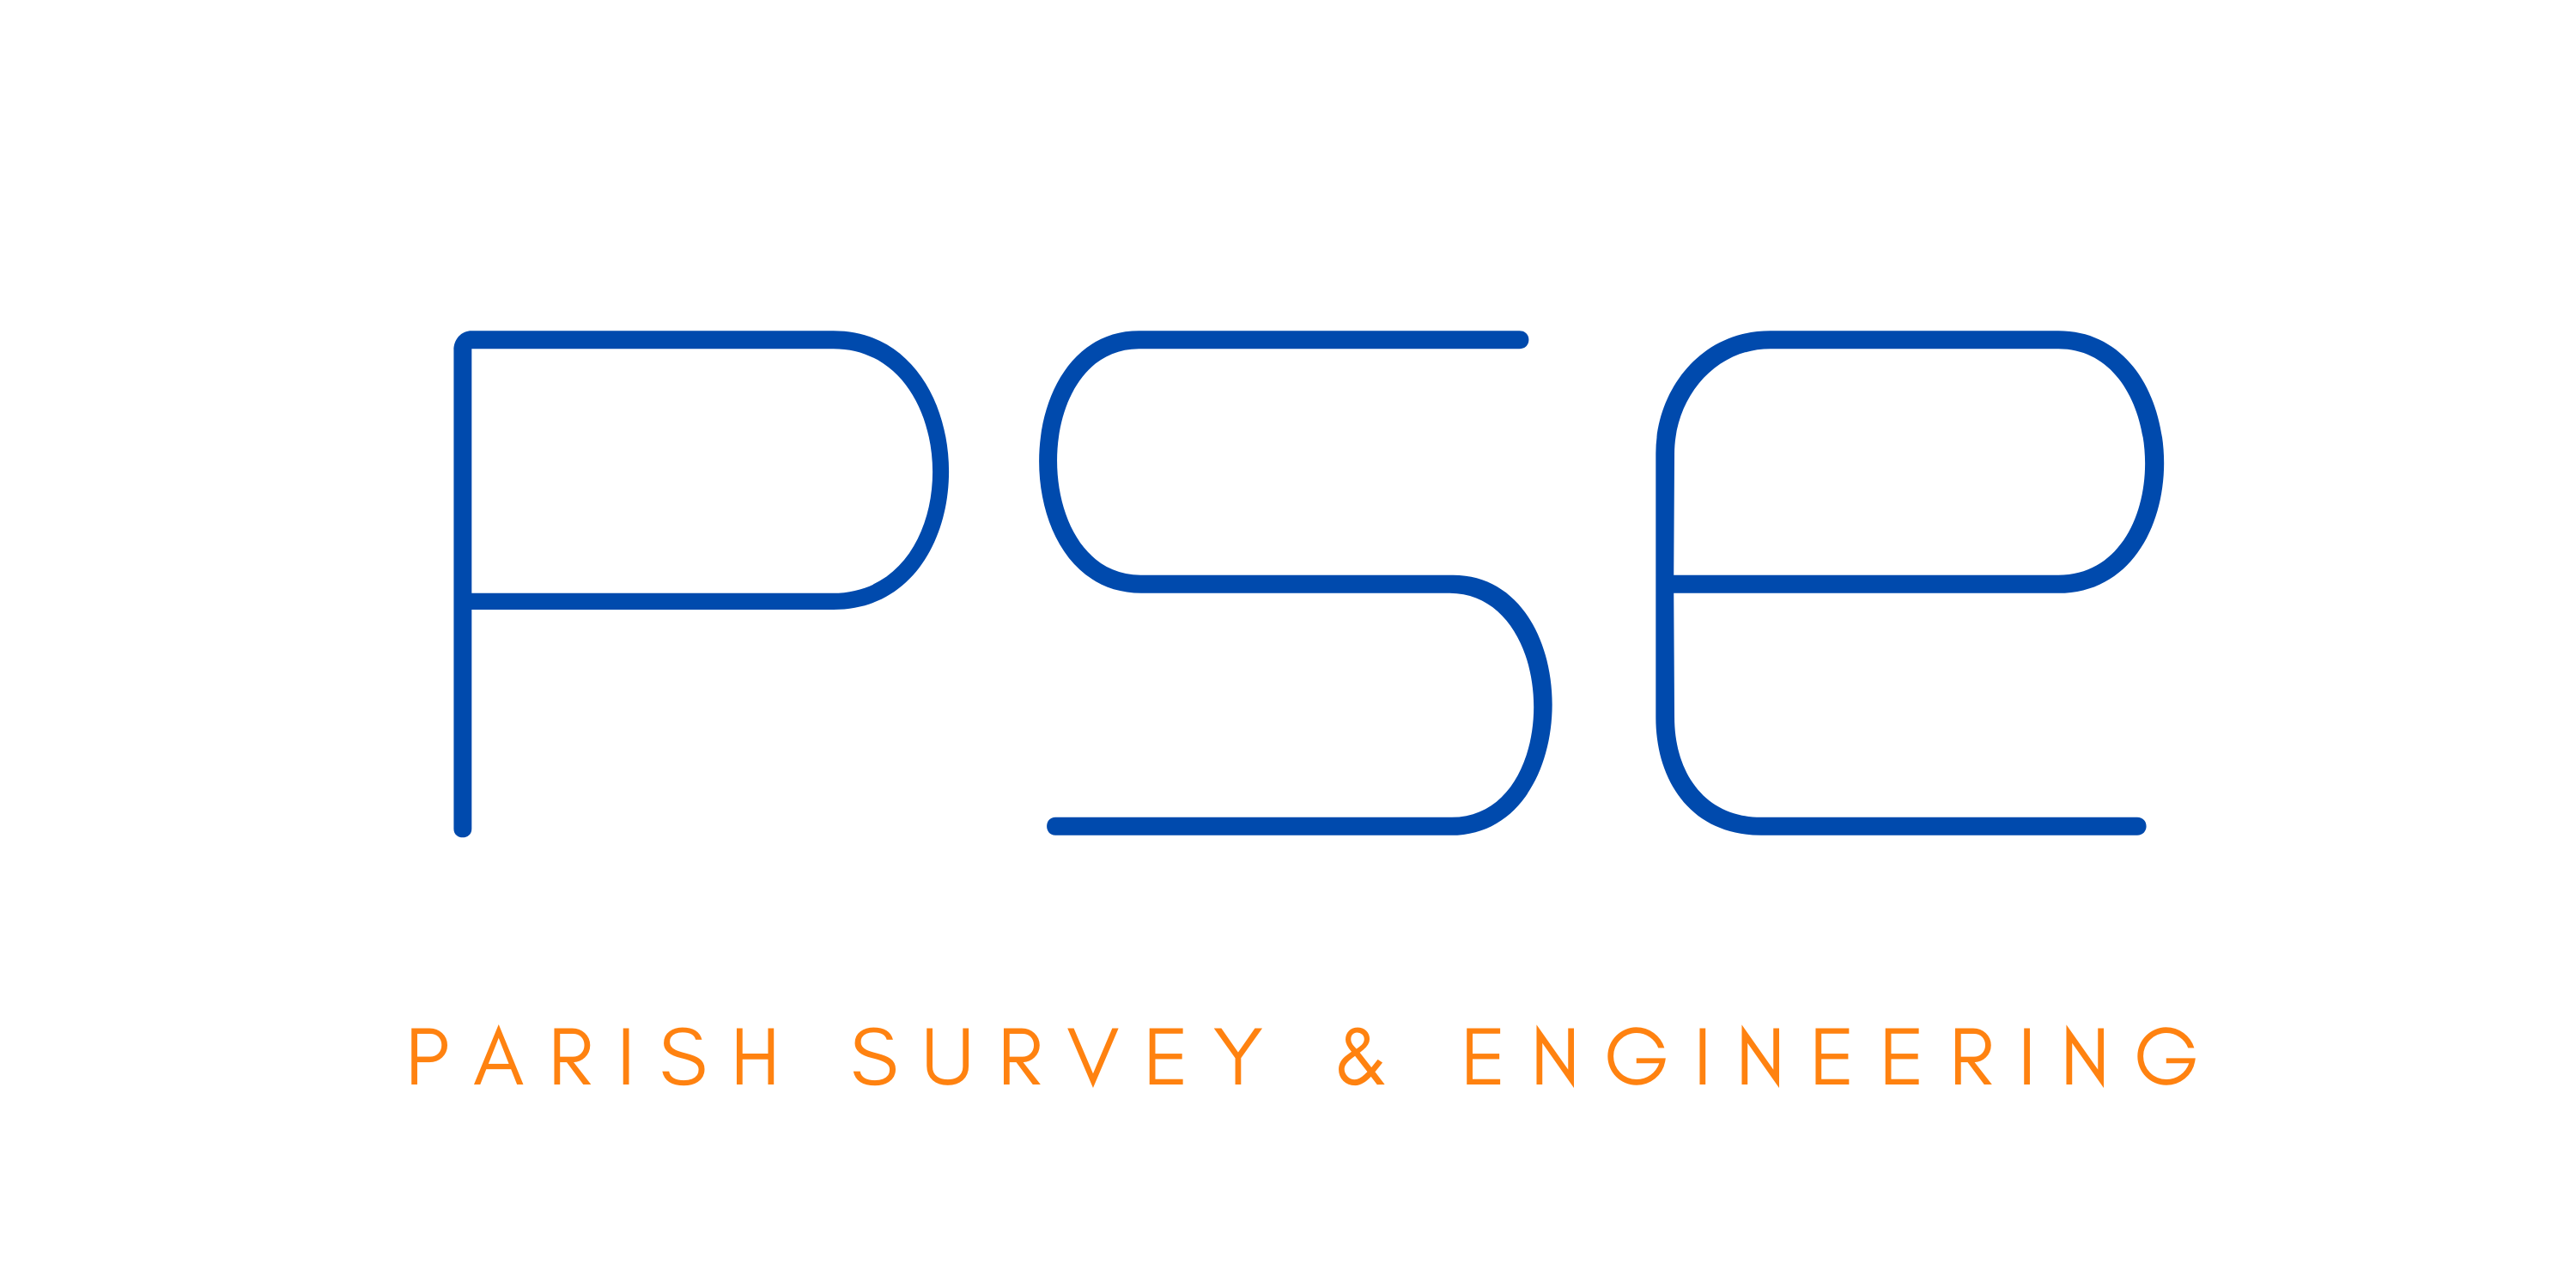 Parish Survey & Engineering